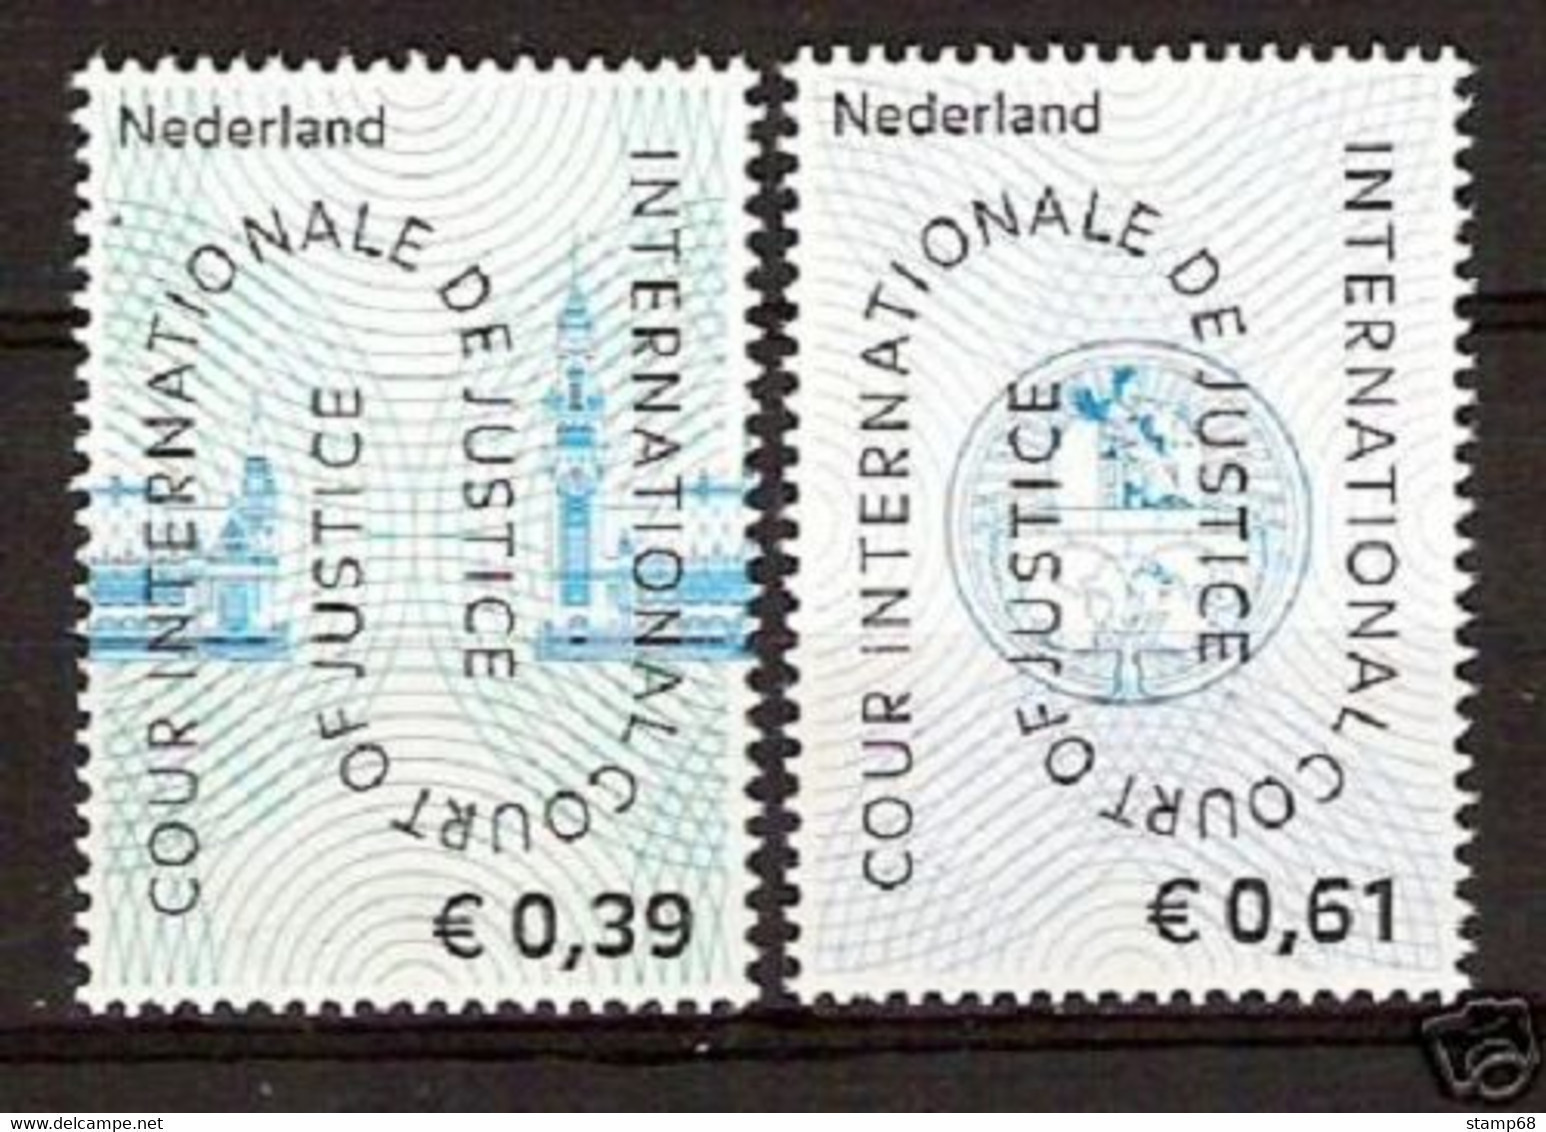 Nederland NVPH D59-60 Cour De Justice 2004 MNH Postfris - Dienstzegels